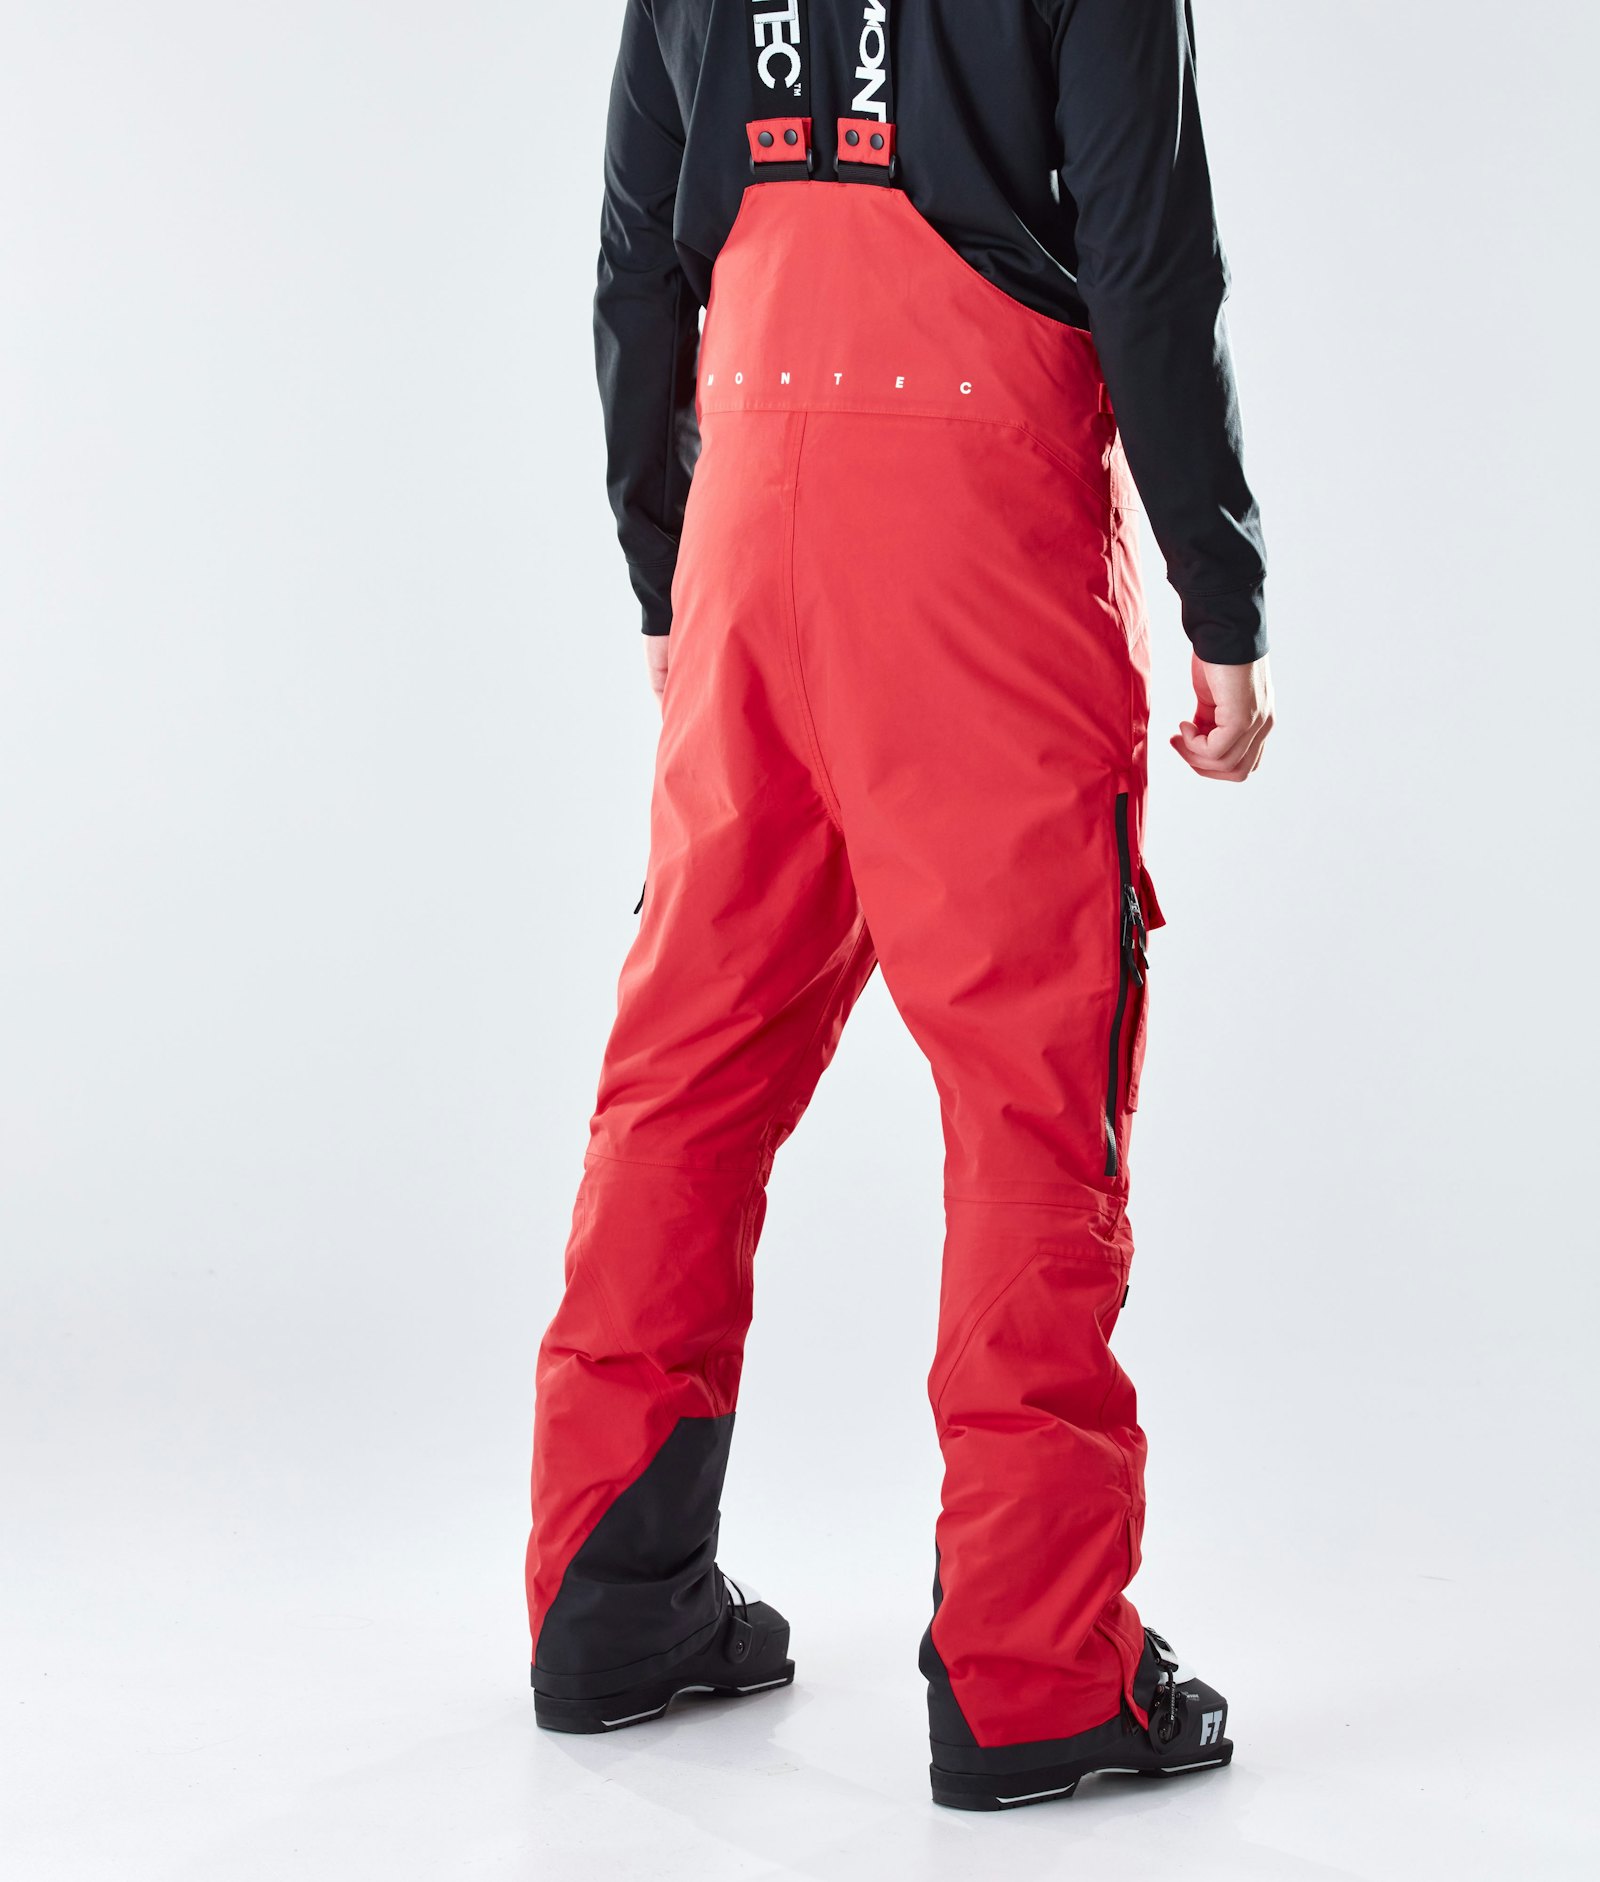 Fawk 2020 Ski Pants Men Red